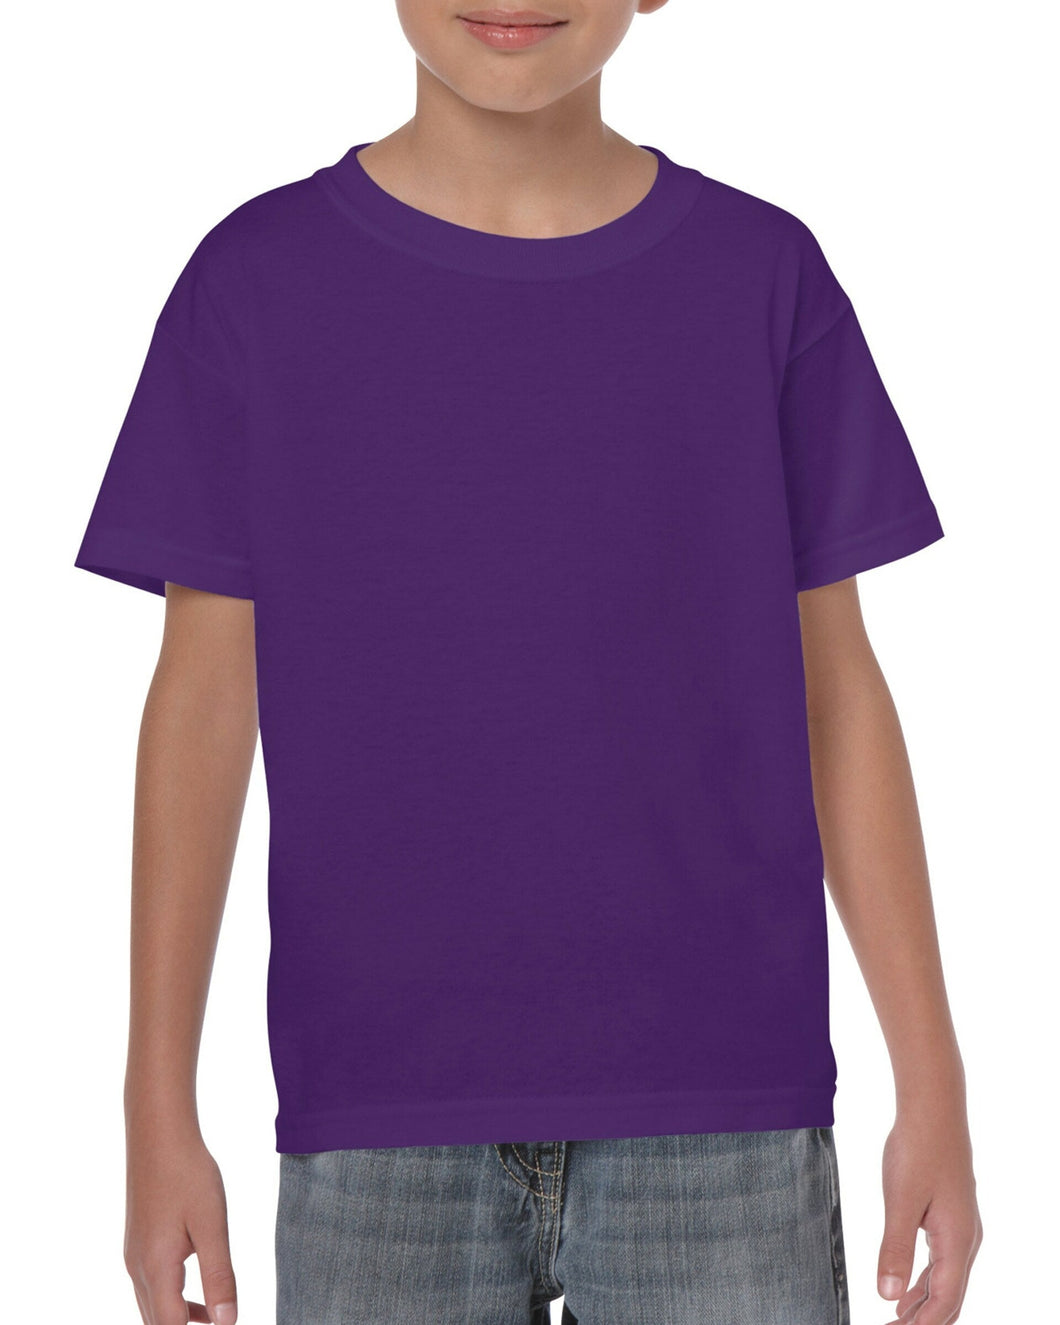 Youth Gildan Unisex Custom Printed T-Shirt (One Sided Print)